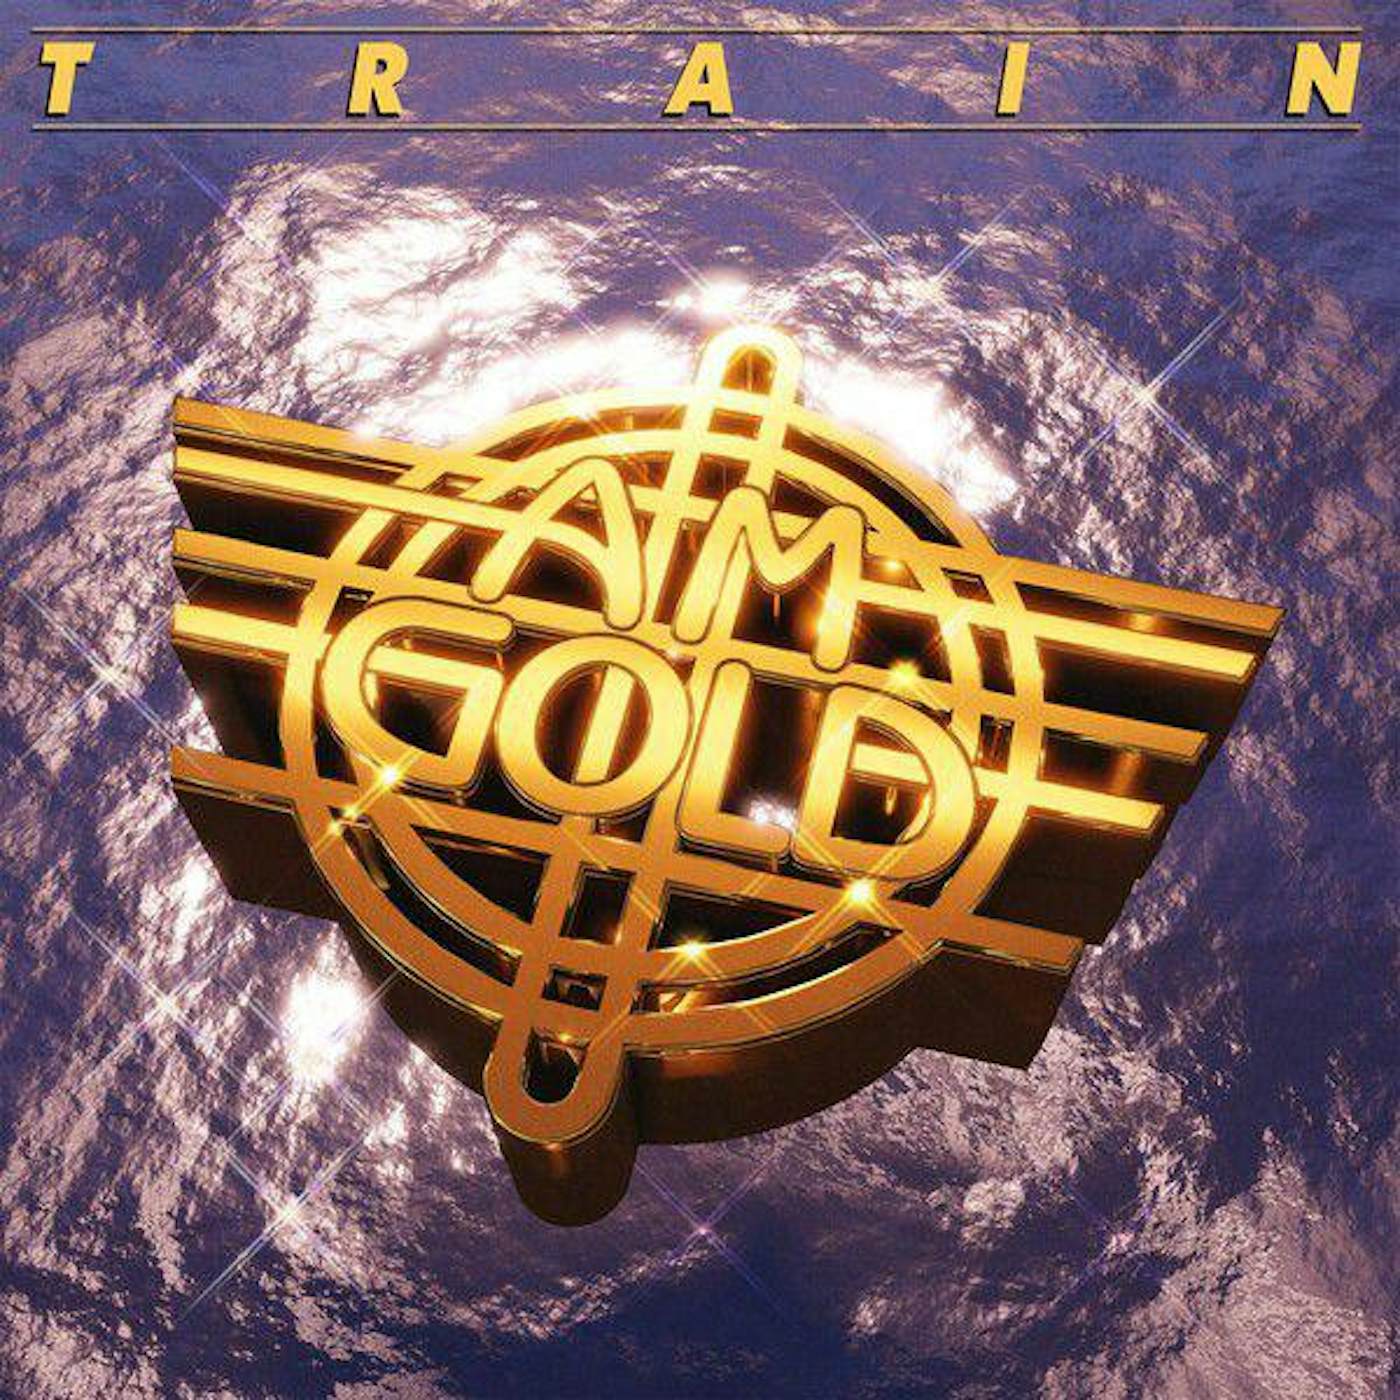 Train AM Gold Vinyl Record